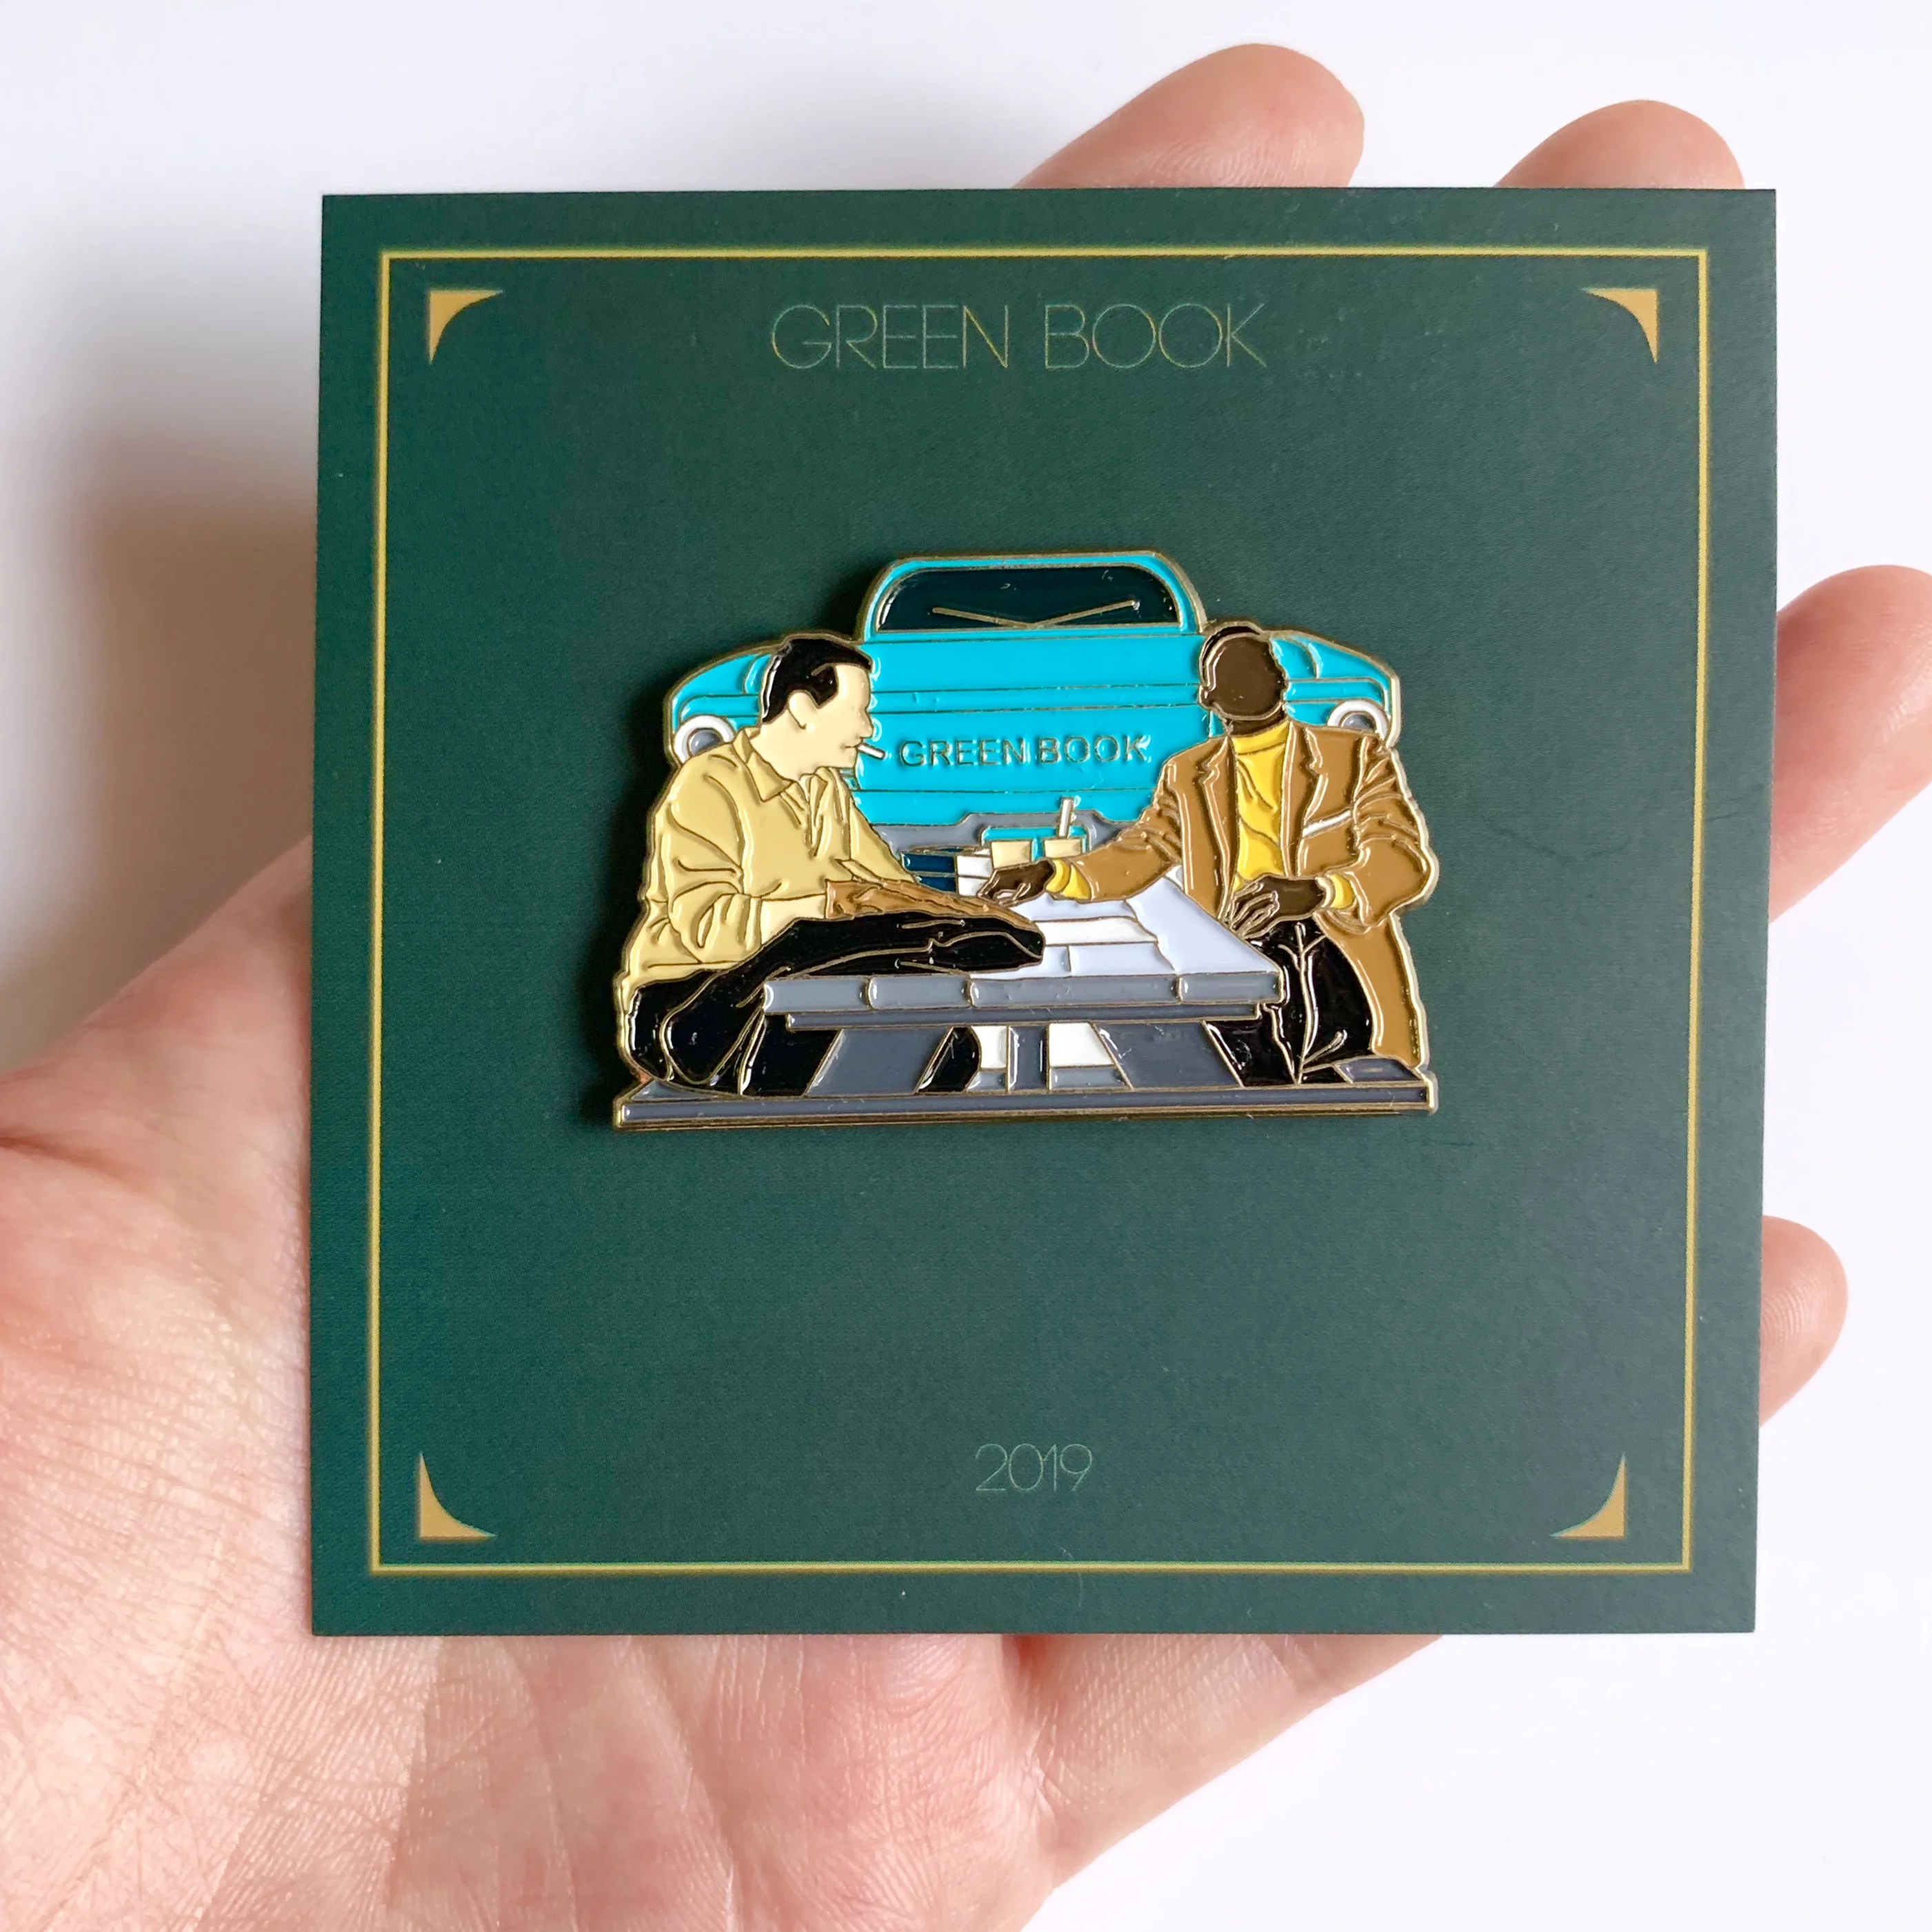 Green Book Viggo Mortensen Peter Farrelly Metal Badge Pin Brooch Cosplay Collection Limit